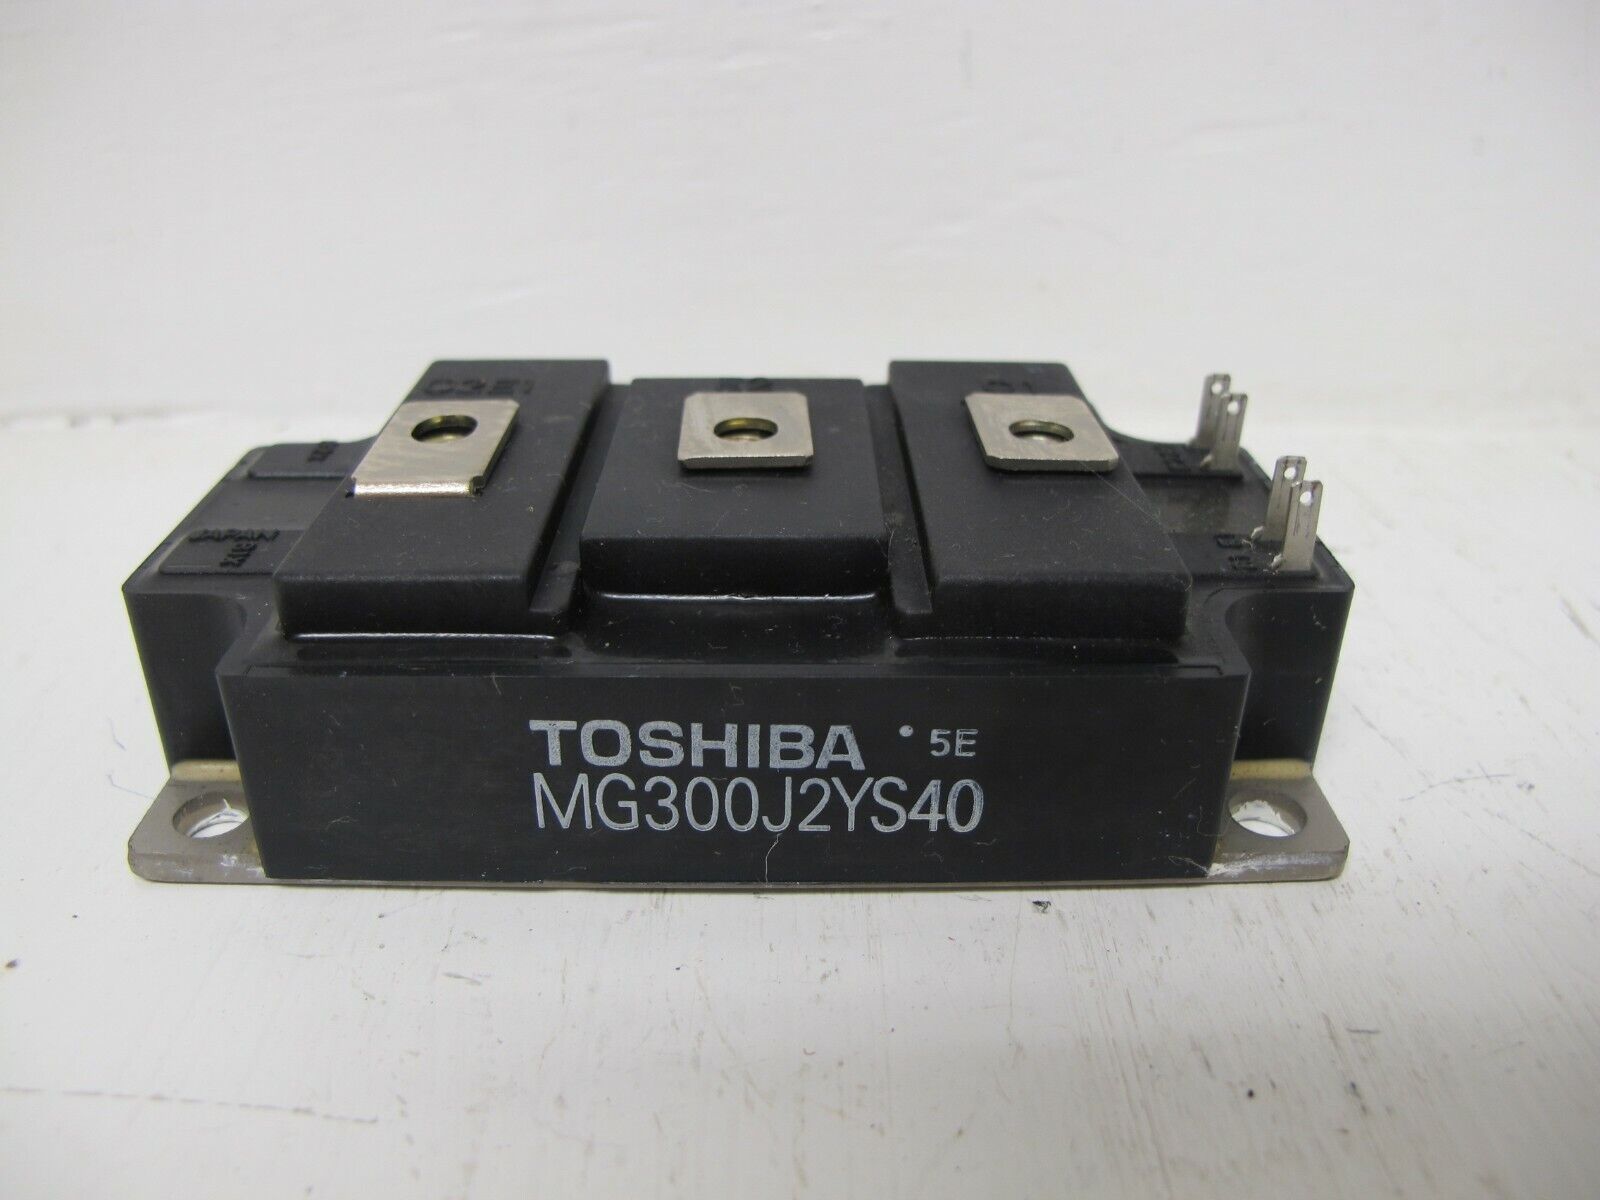 Toshiba MG300J2YS40 IGBT Block Thyristor Power Module Transistor 600V